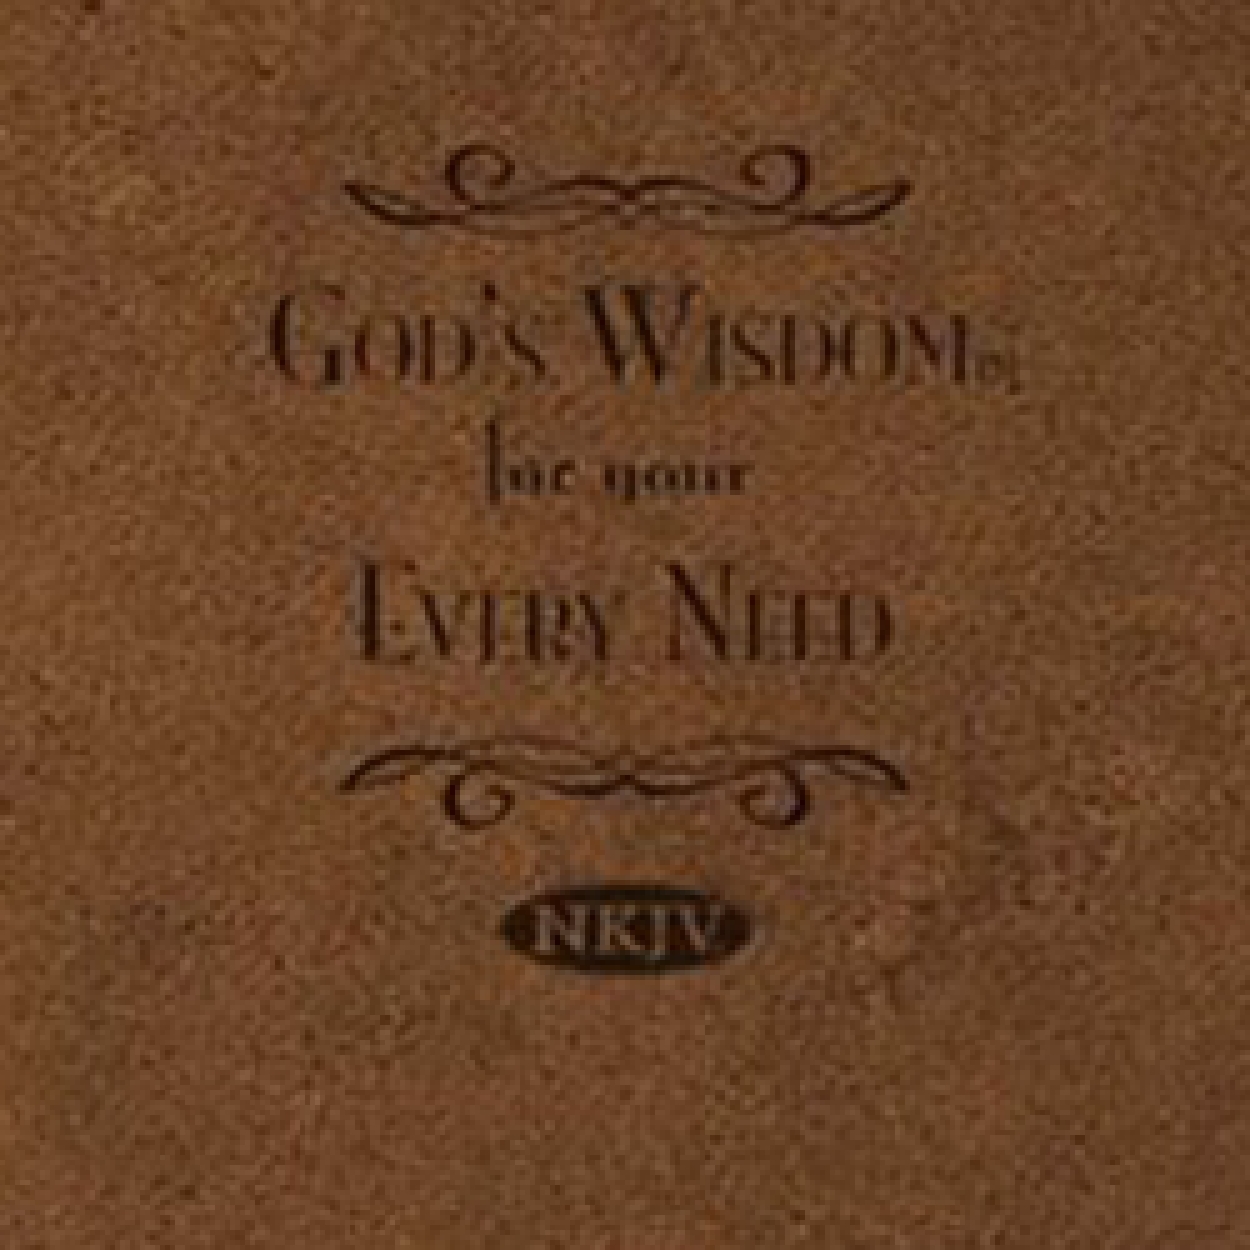 Bk256Lg God's Wisdom for Every Need